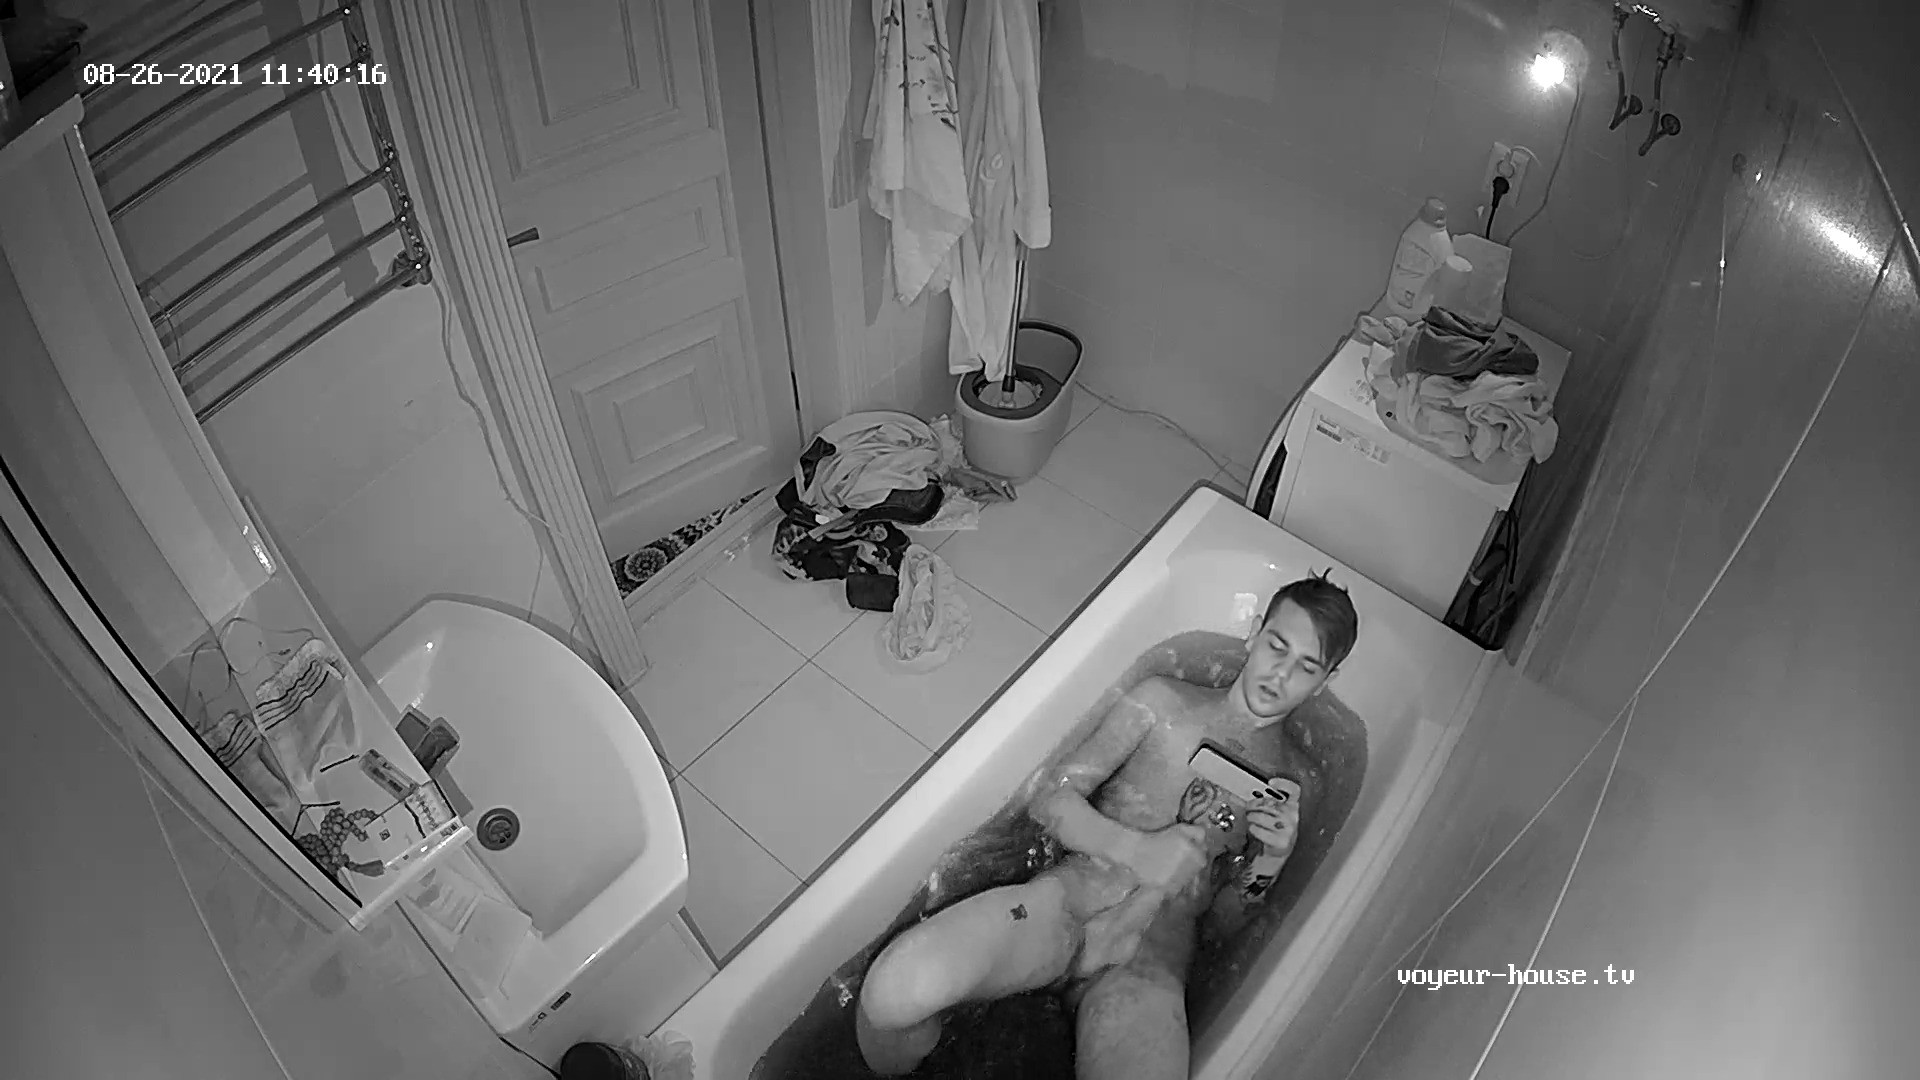 Artem, piss, bath & jerking off 26 Aug 2021